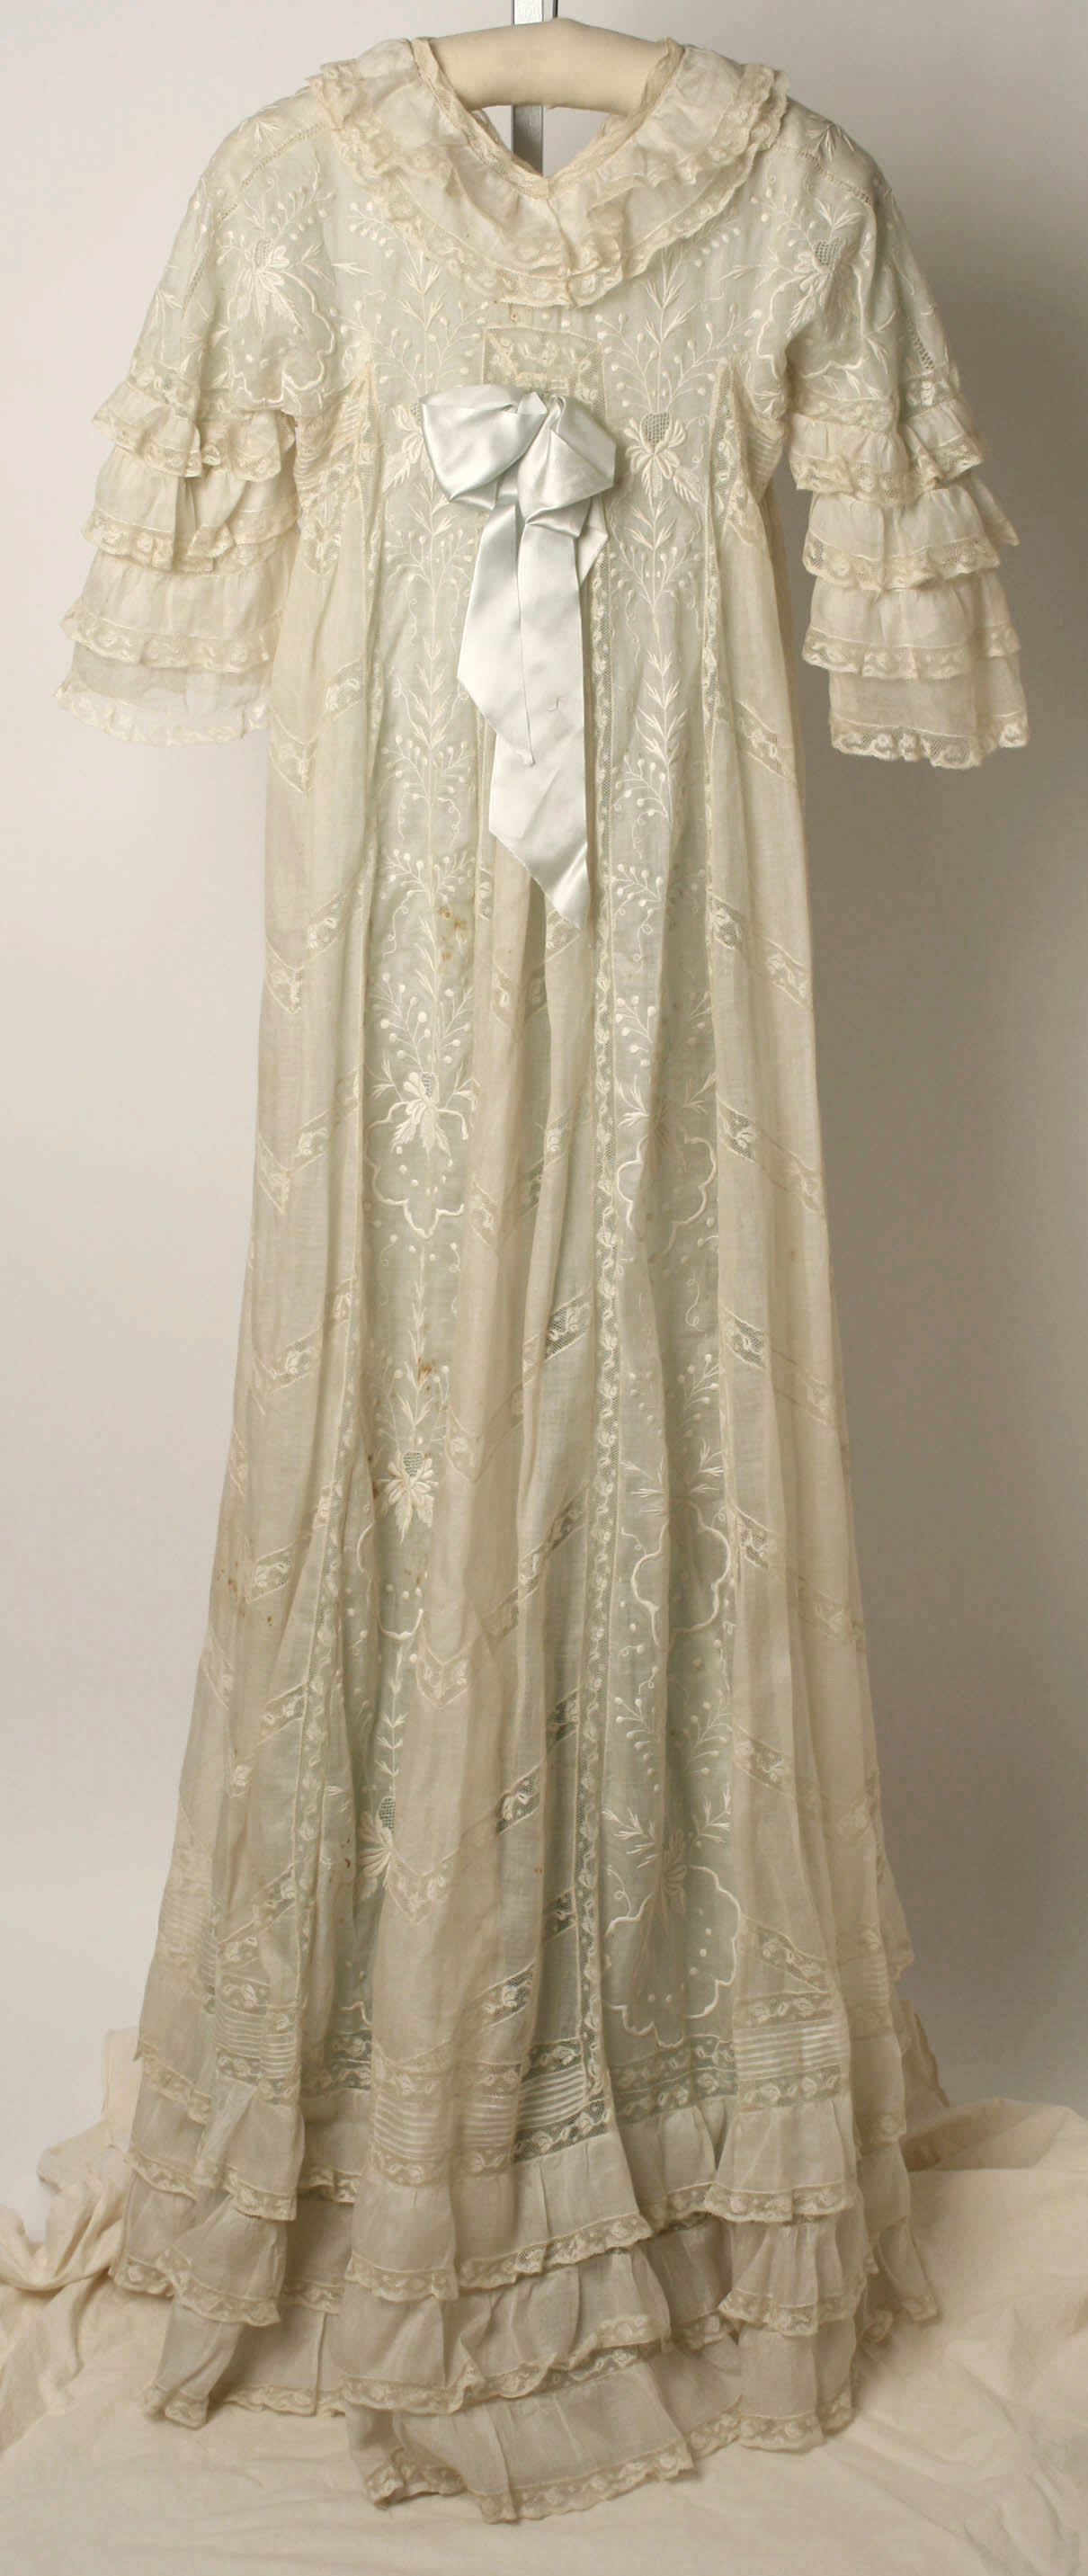 Tea gown | American or European | The Metropolitan Museum of Art